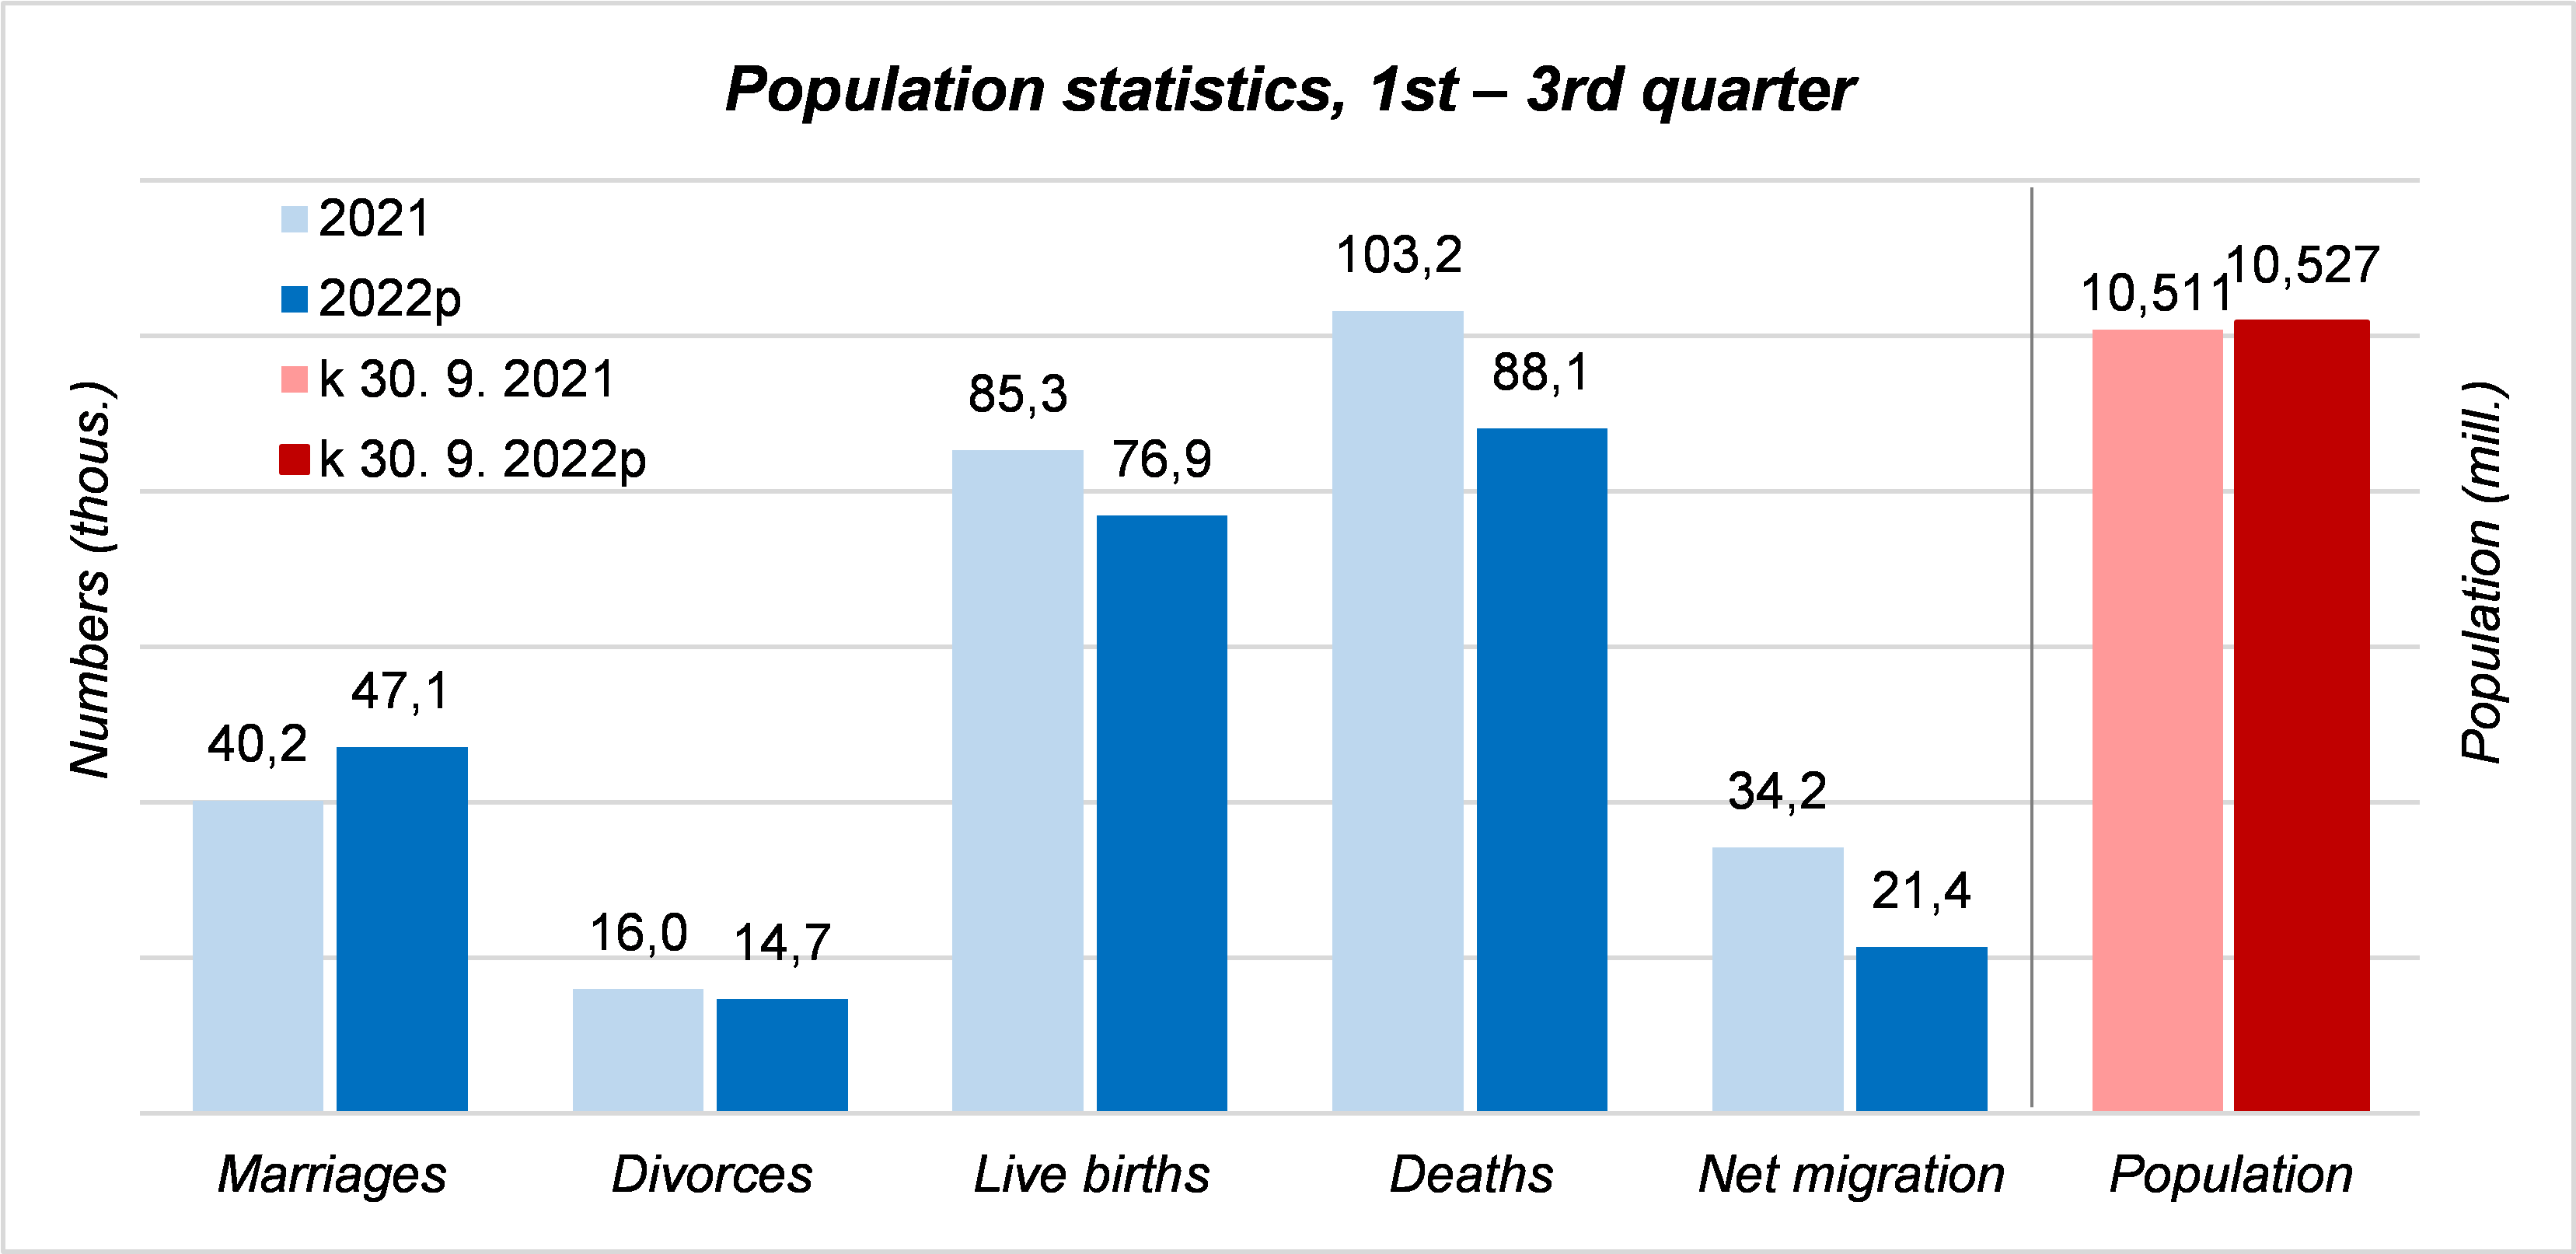 Population statistics, 1st - 3rd quarter 2022